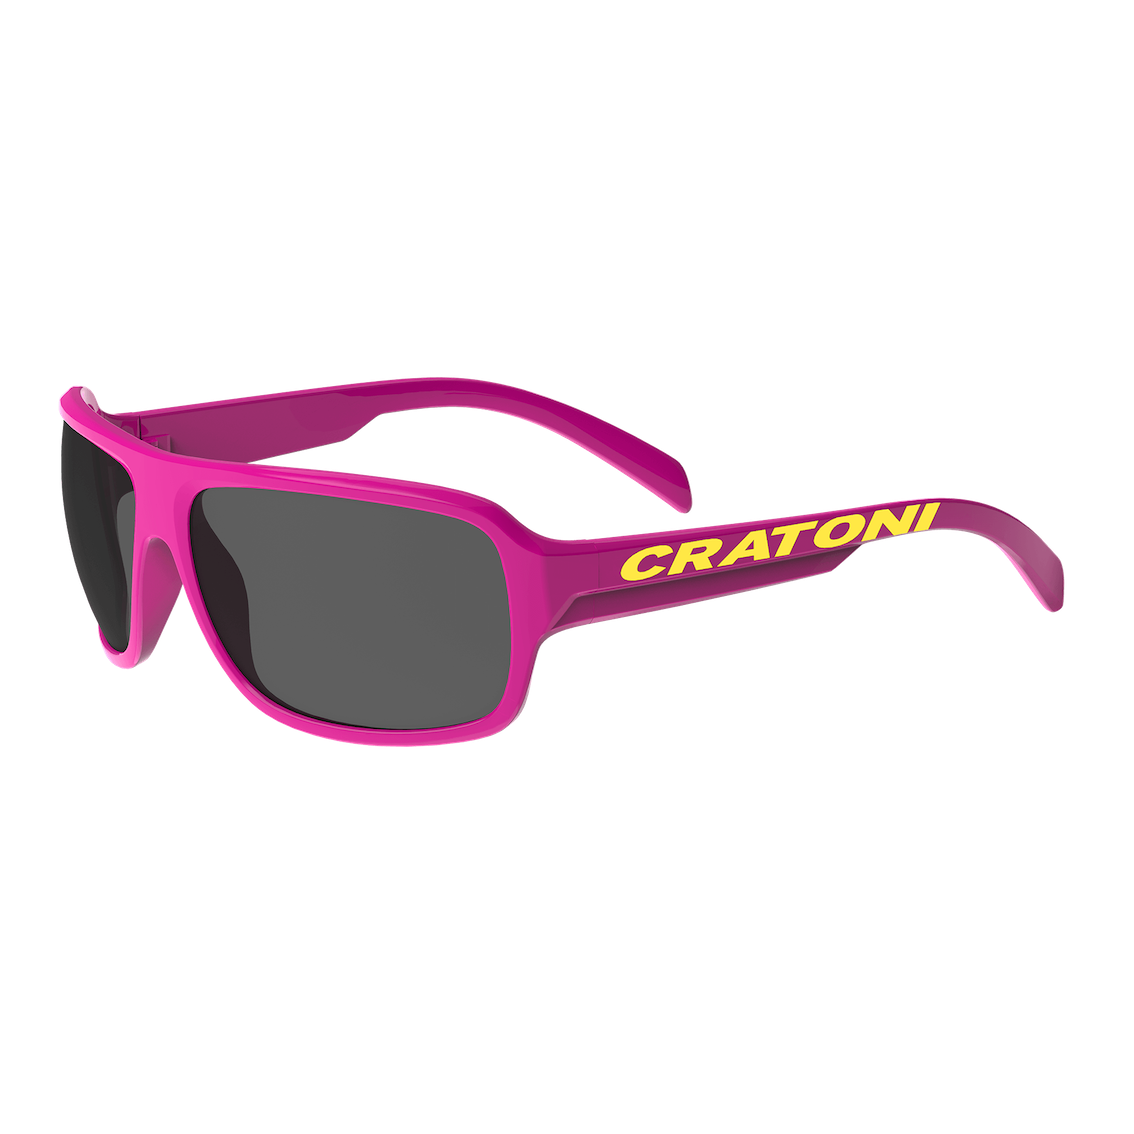 Детские очки Cratoni C-ICE JR pink glossy